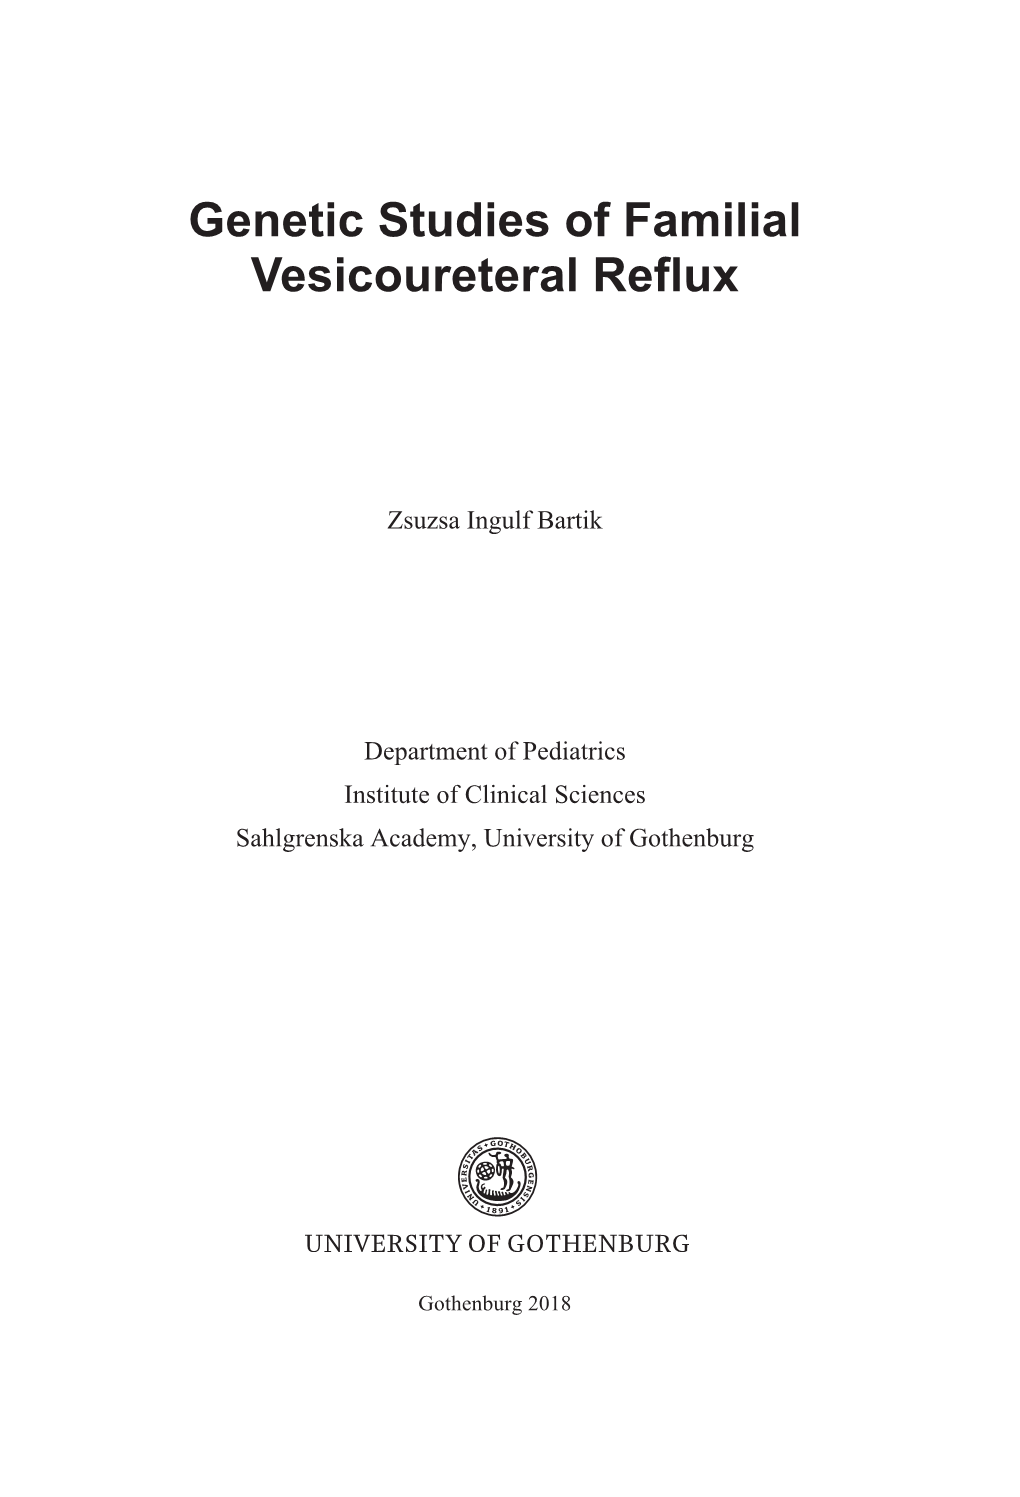 Genetic Studies of Familial Vesicoureteral Reflux